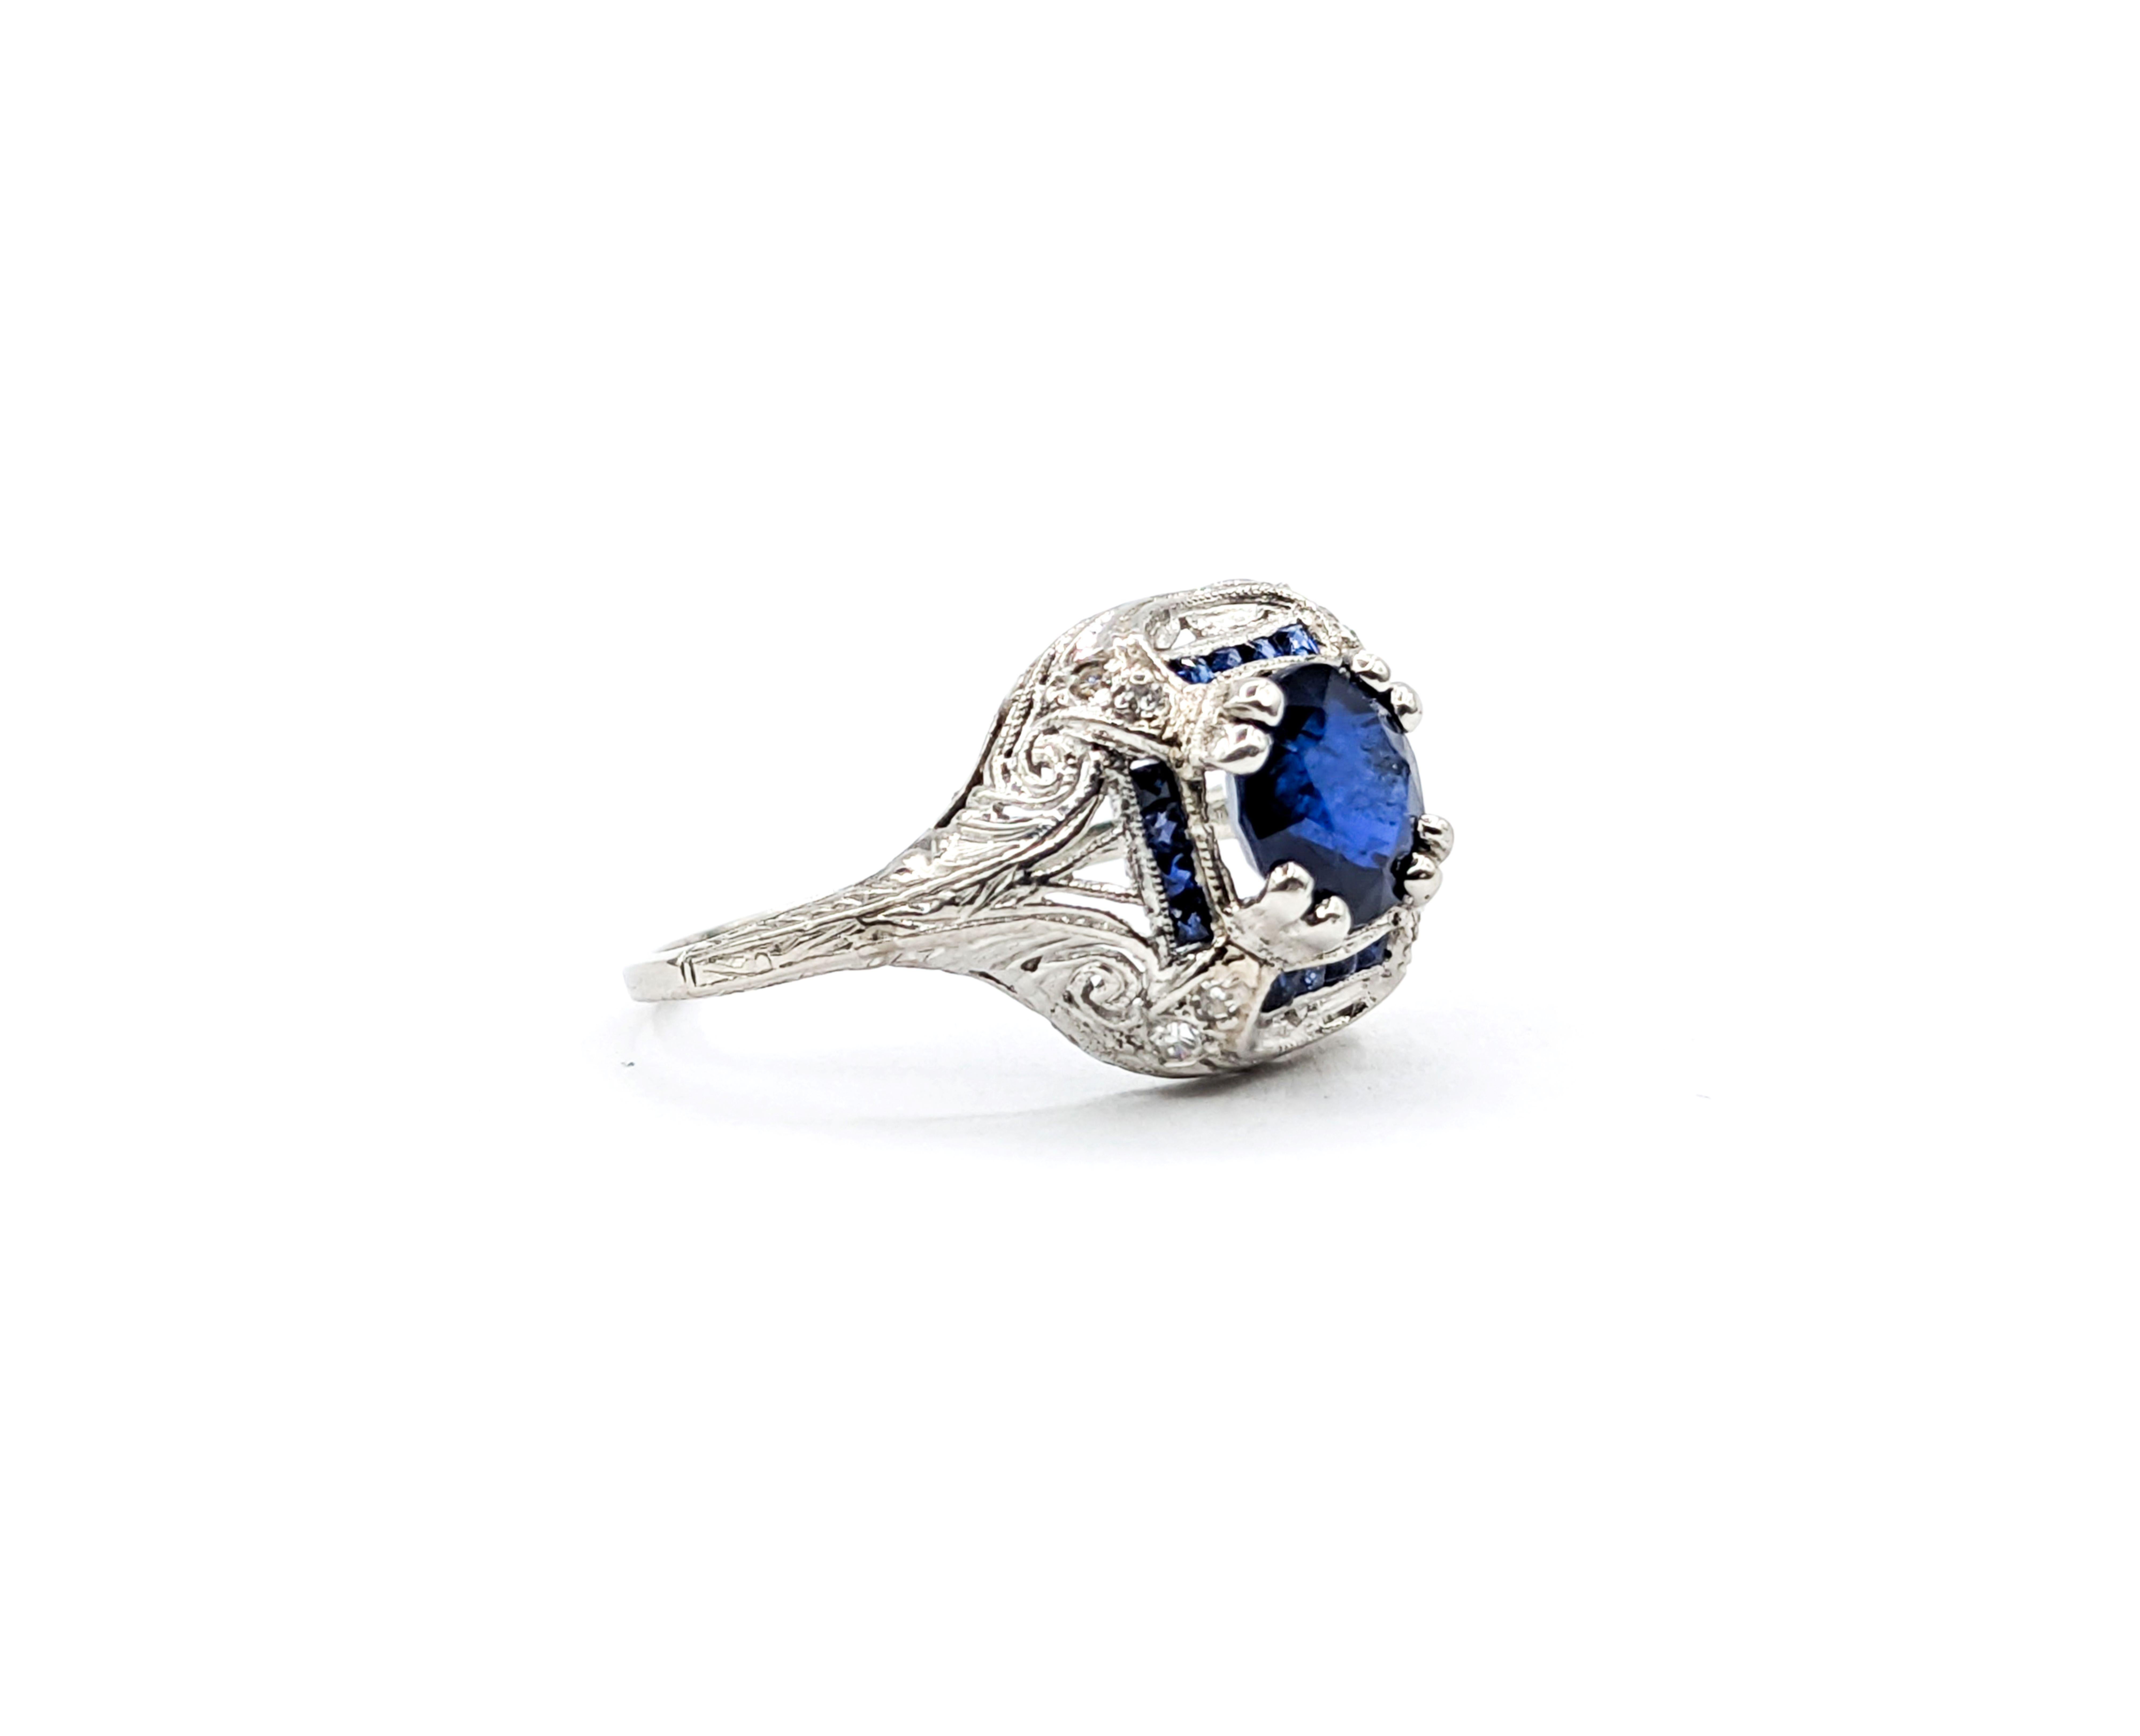 Fantastic Antique Art Deco Ring with Sapphire and Diamonds in Platinum Filigree 4